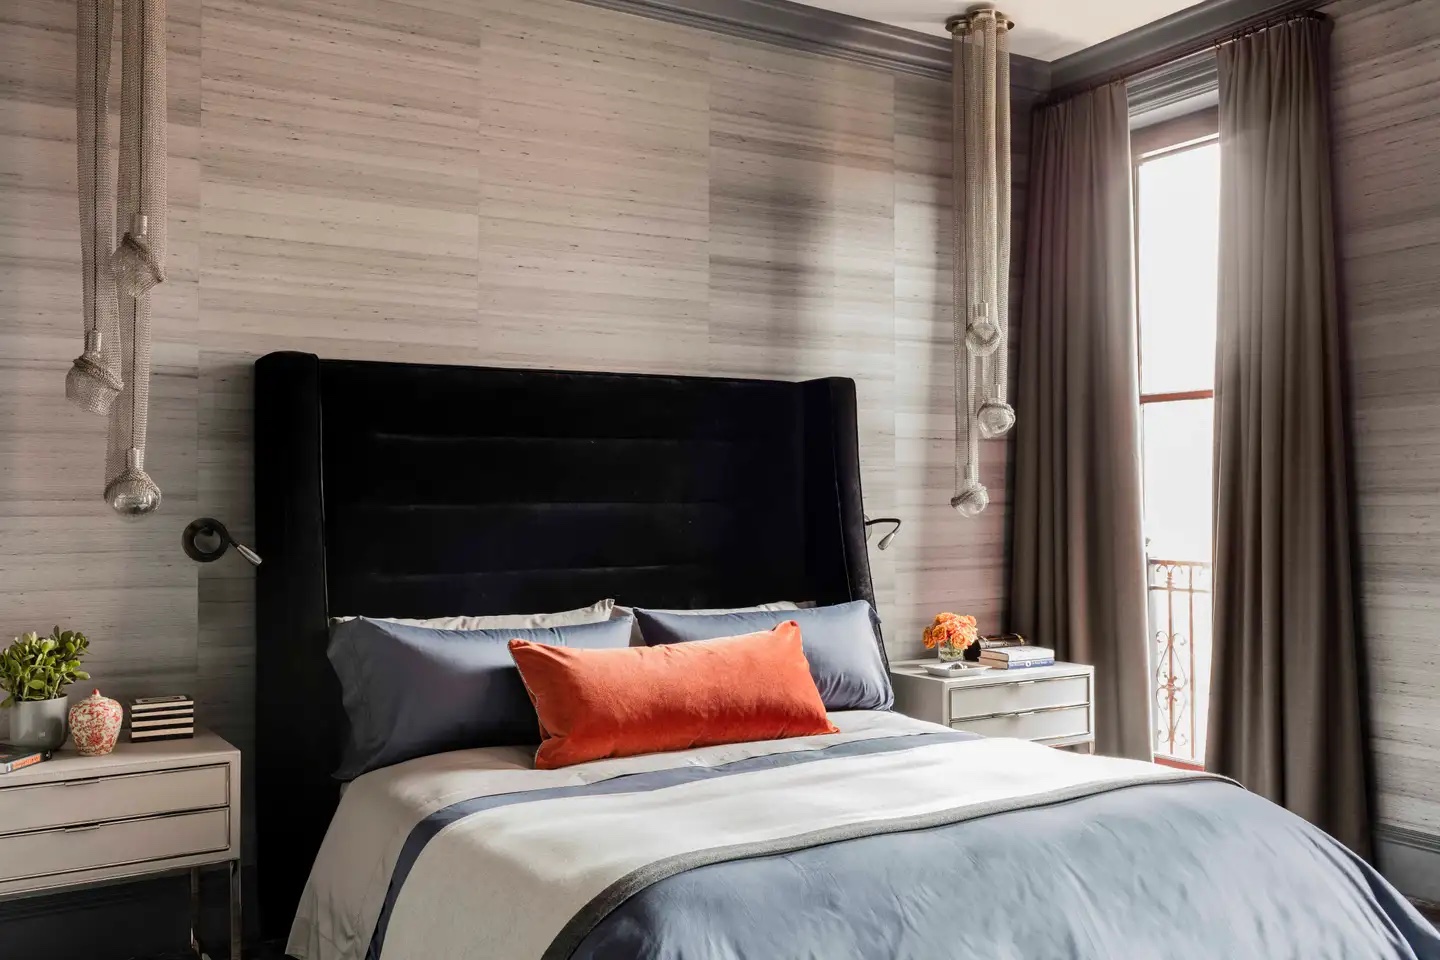 Beacon Street bedroom designed by Elms Interior Design